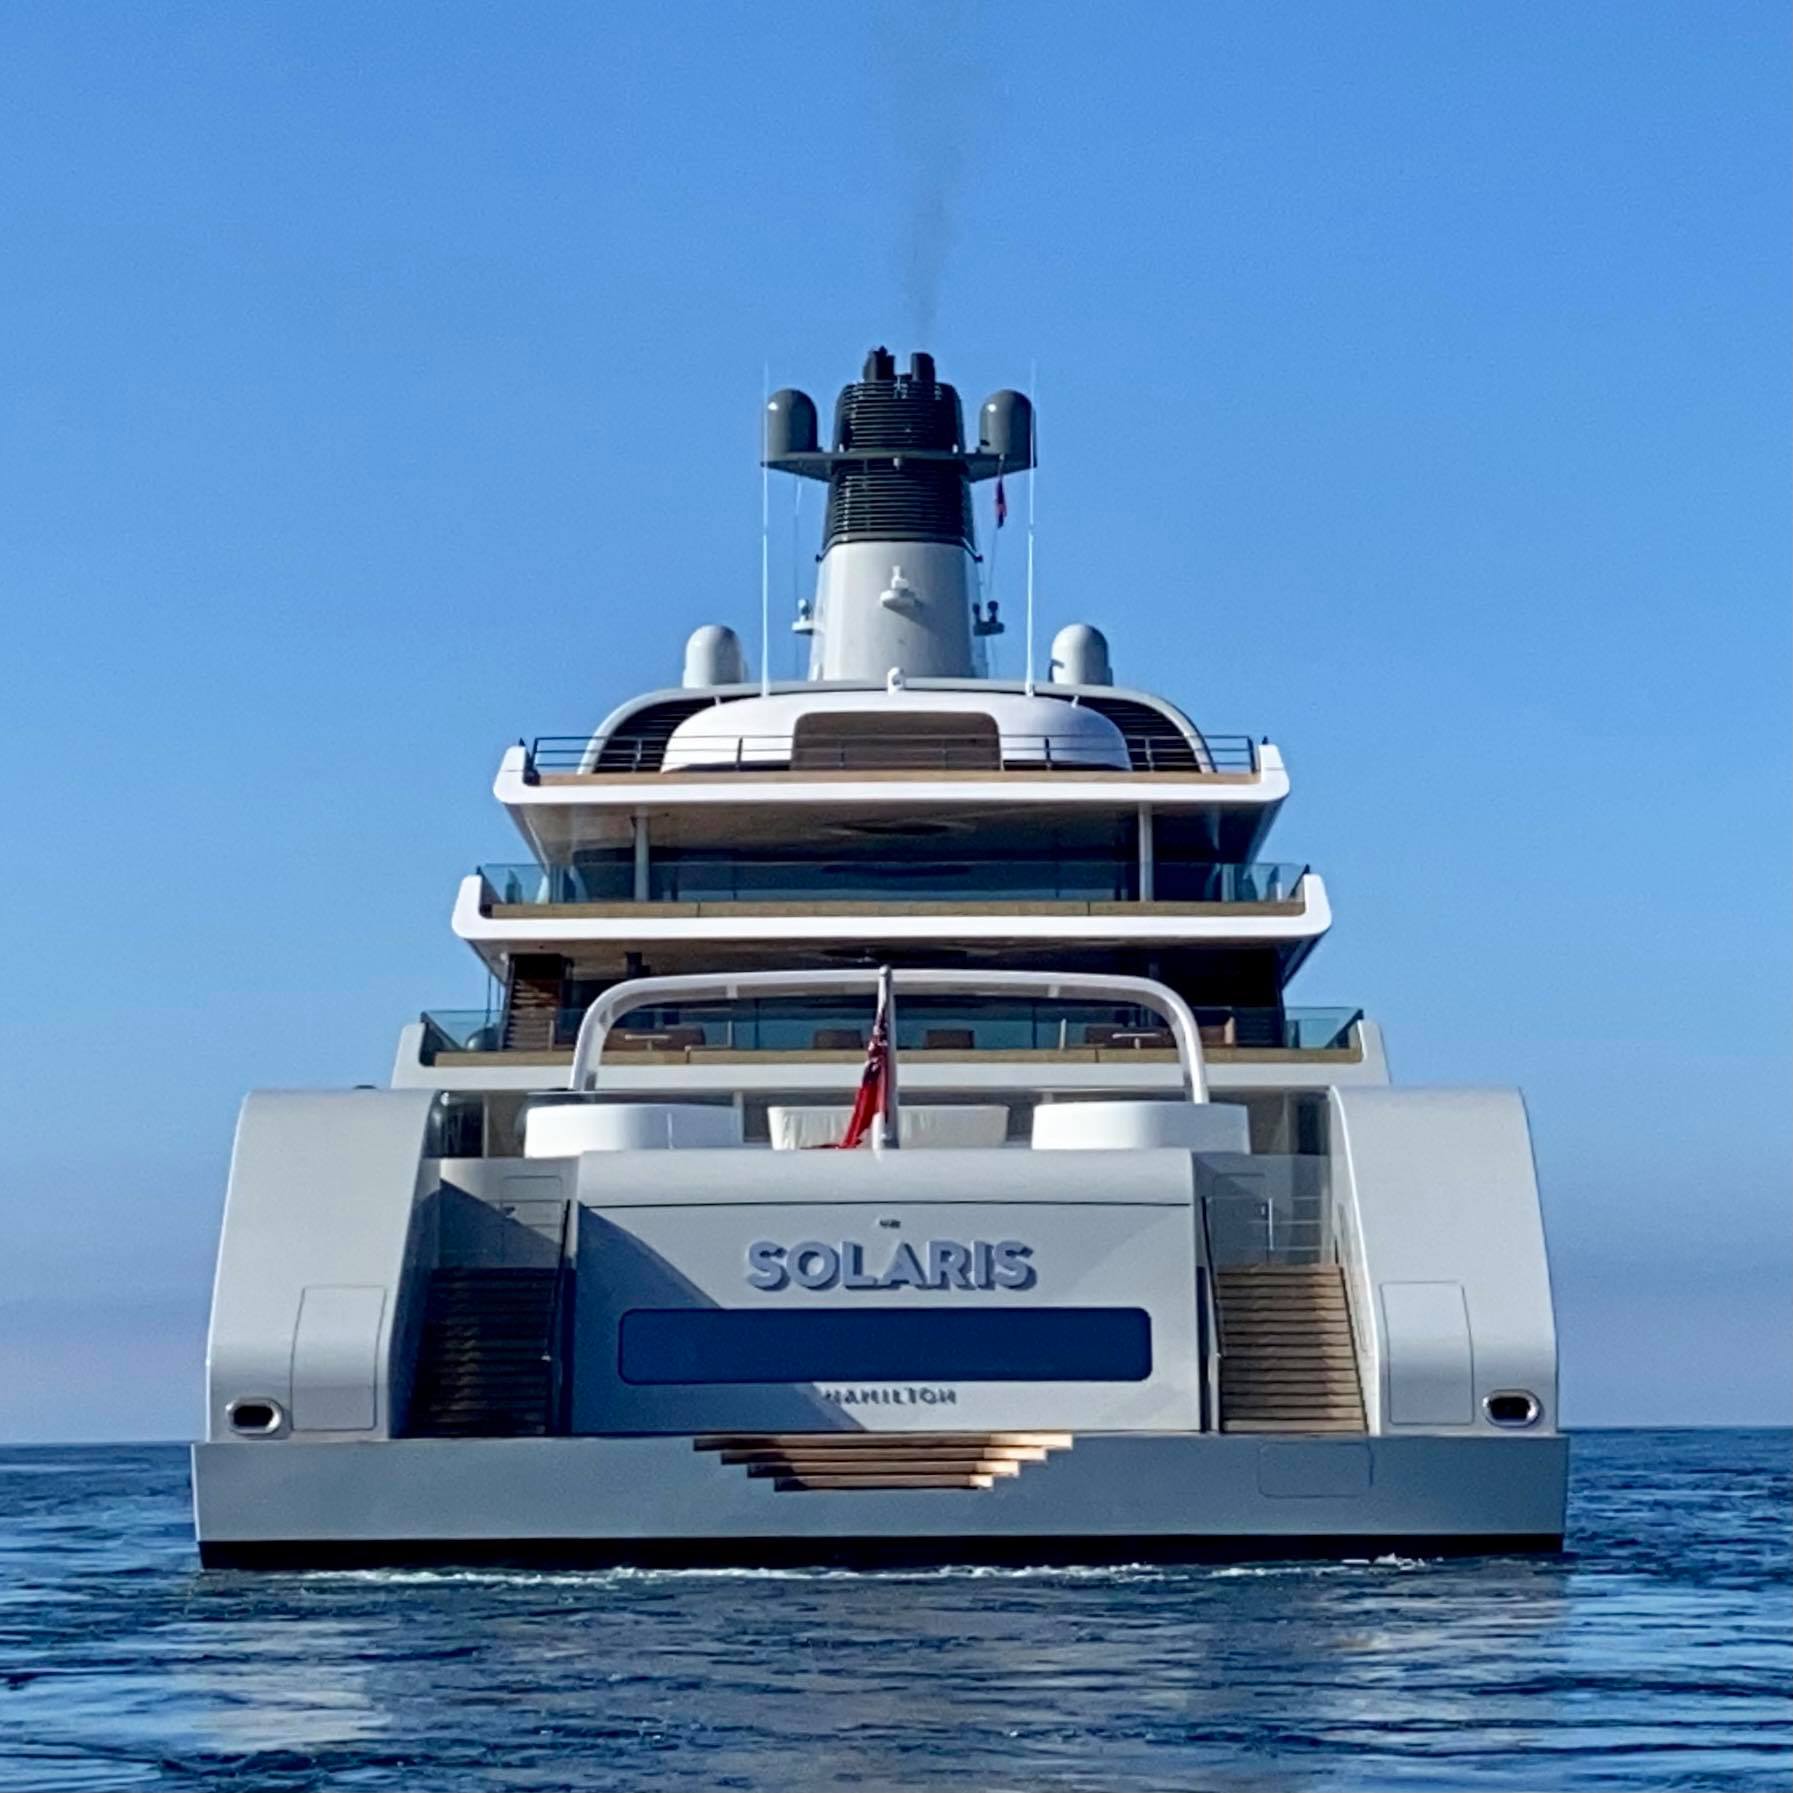 solaris yacht vesselfinder